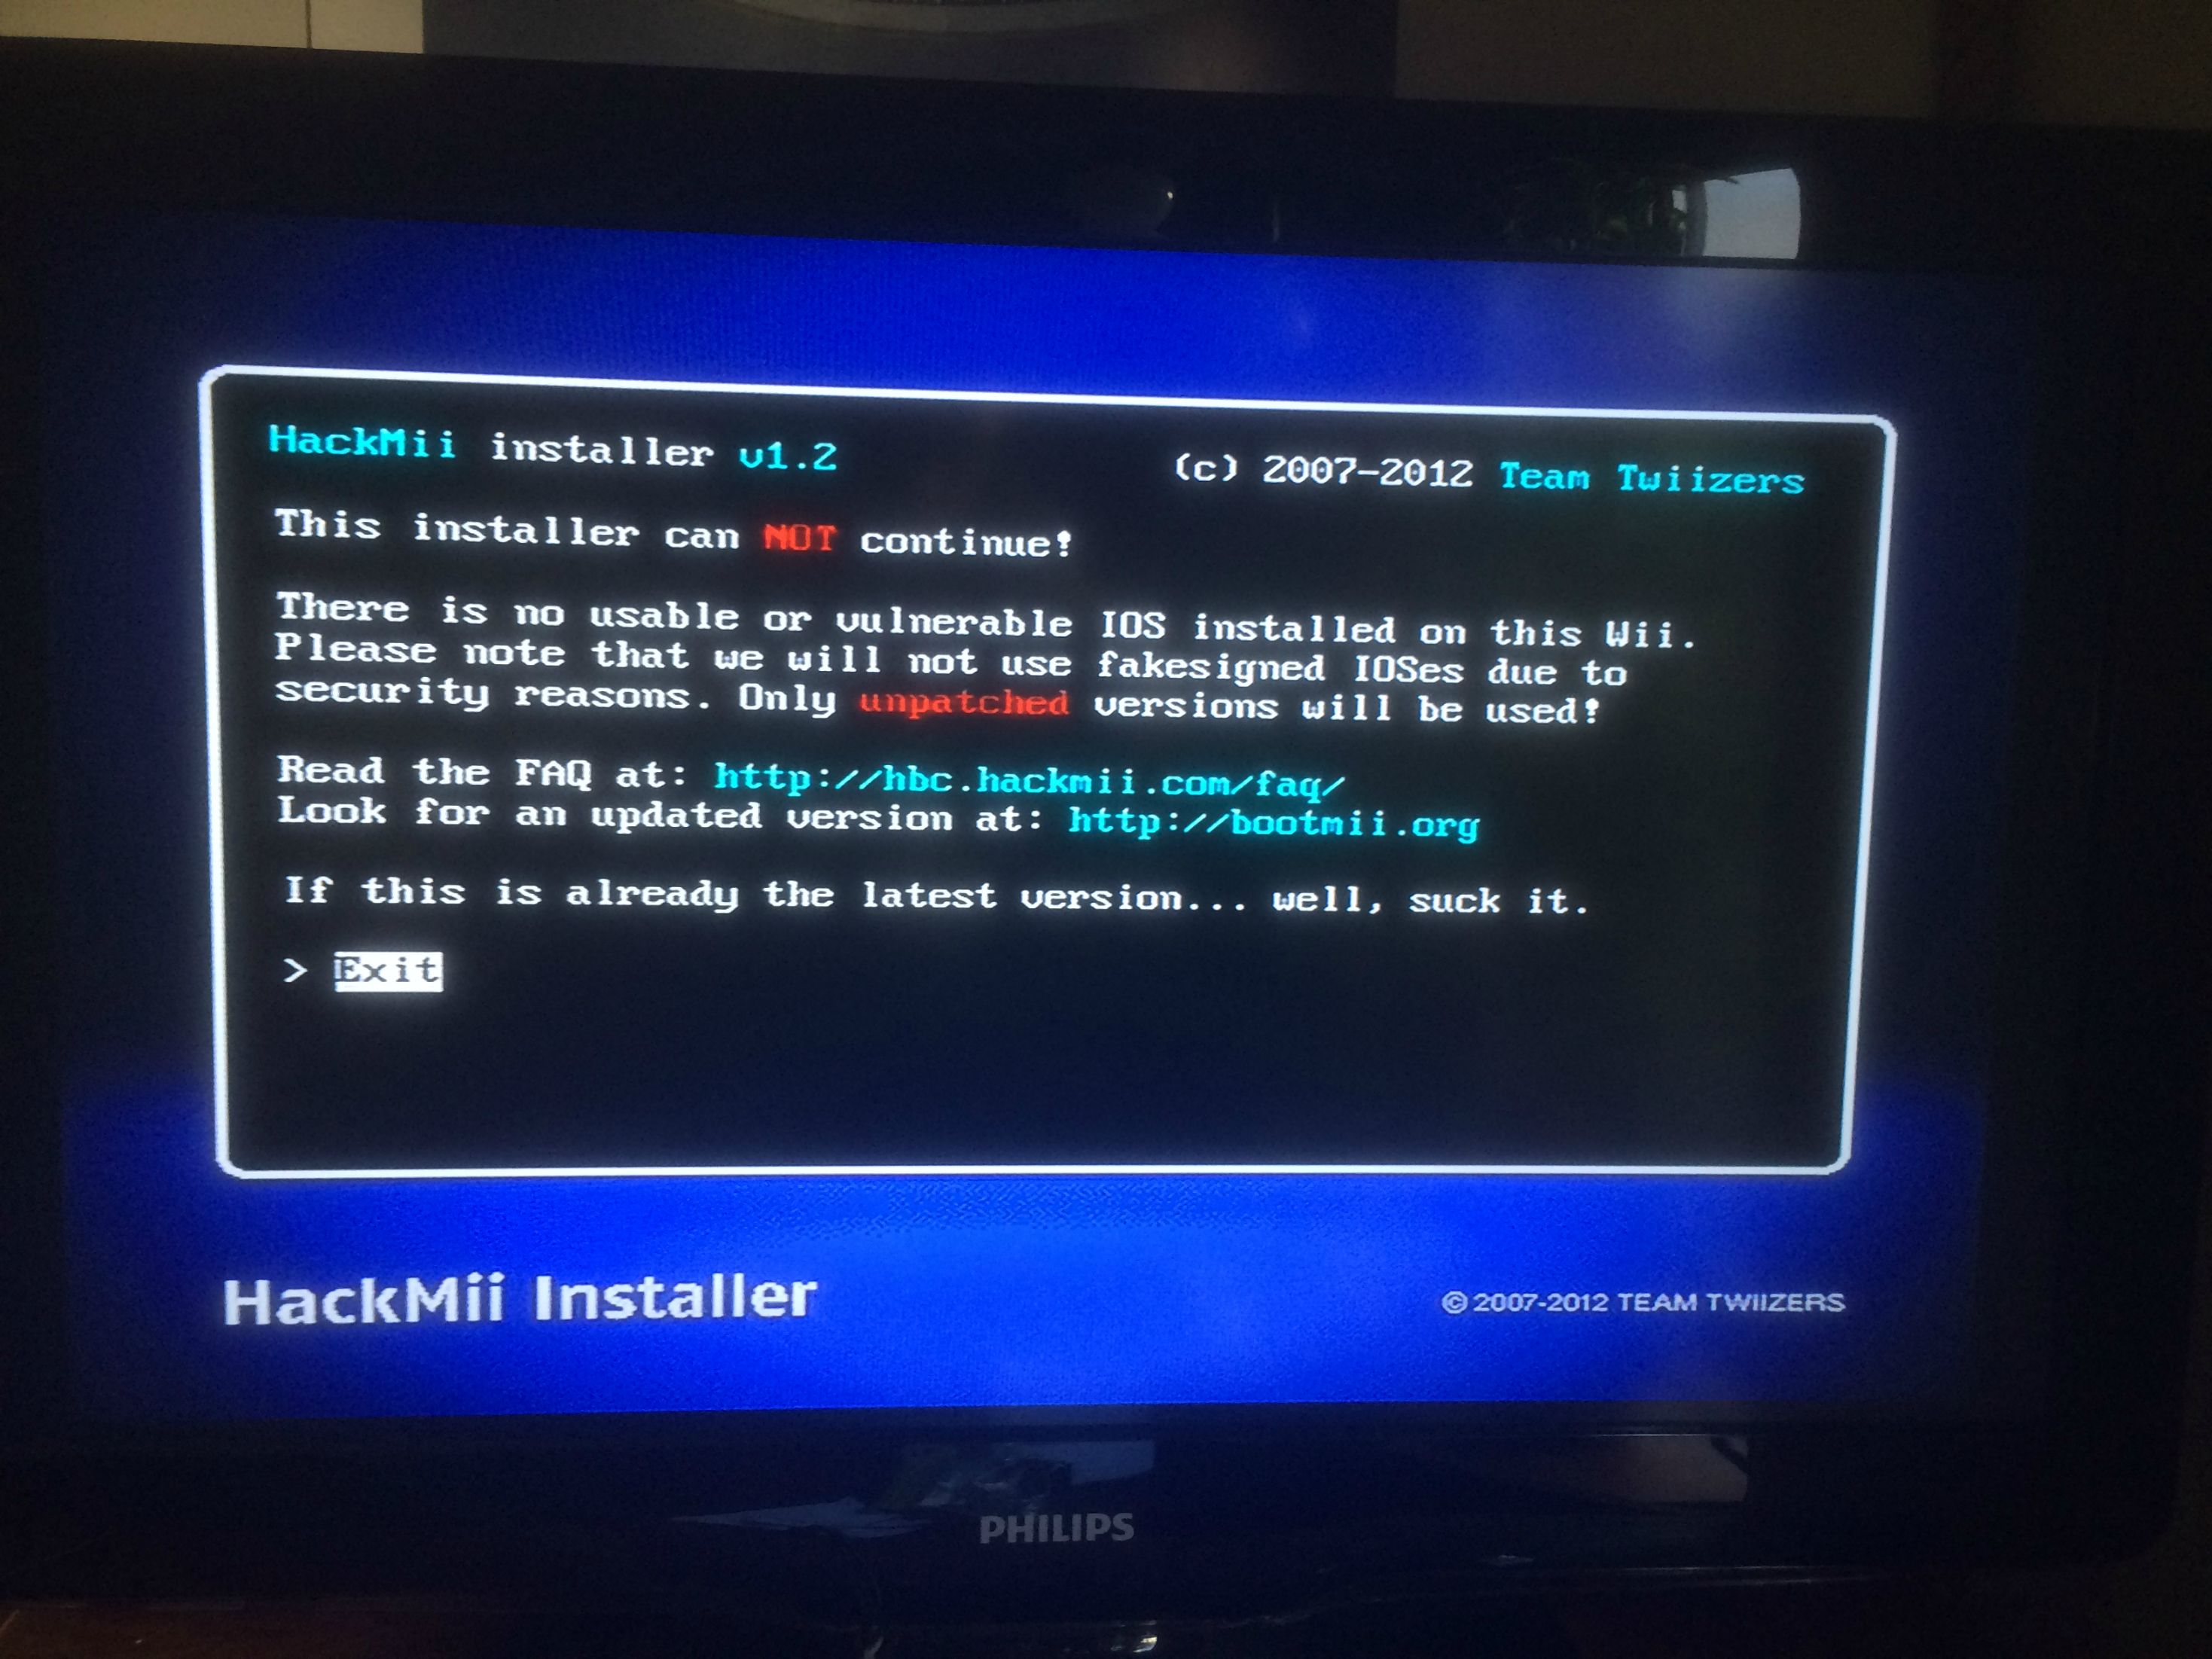 Hackmii installer 4.1 u